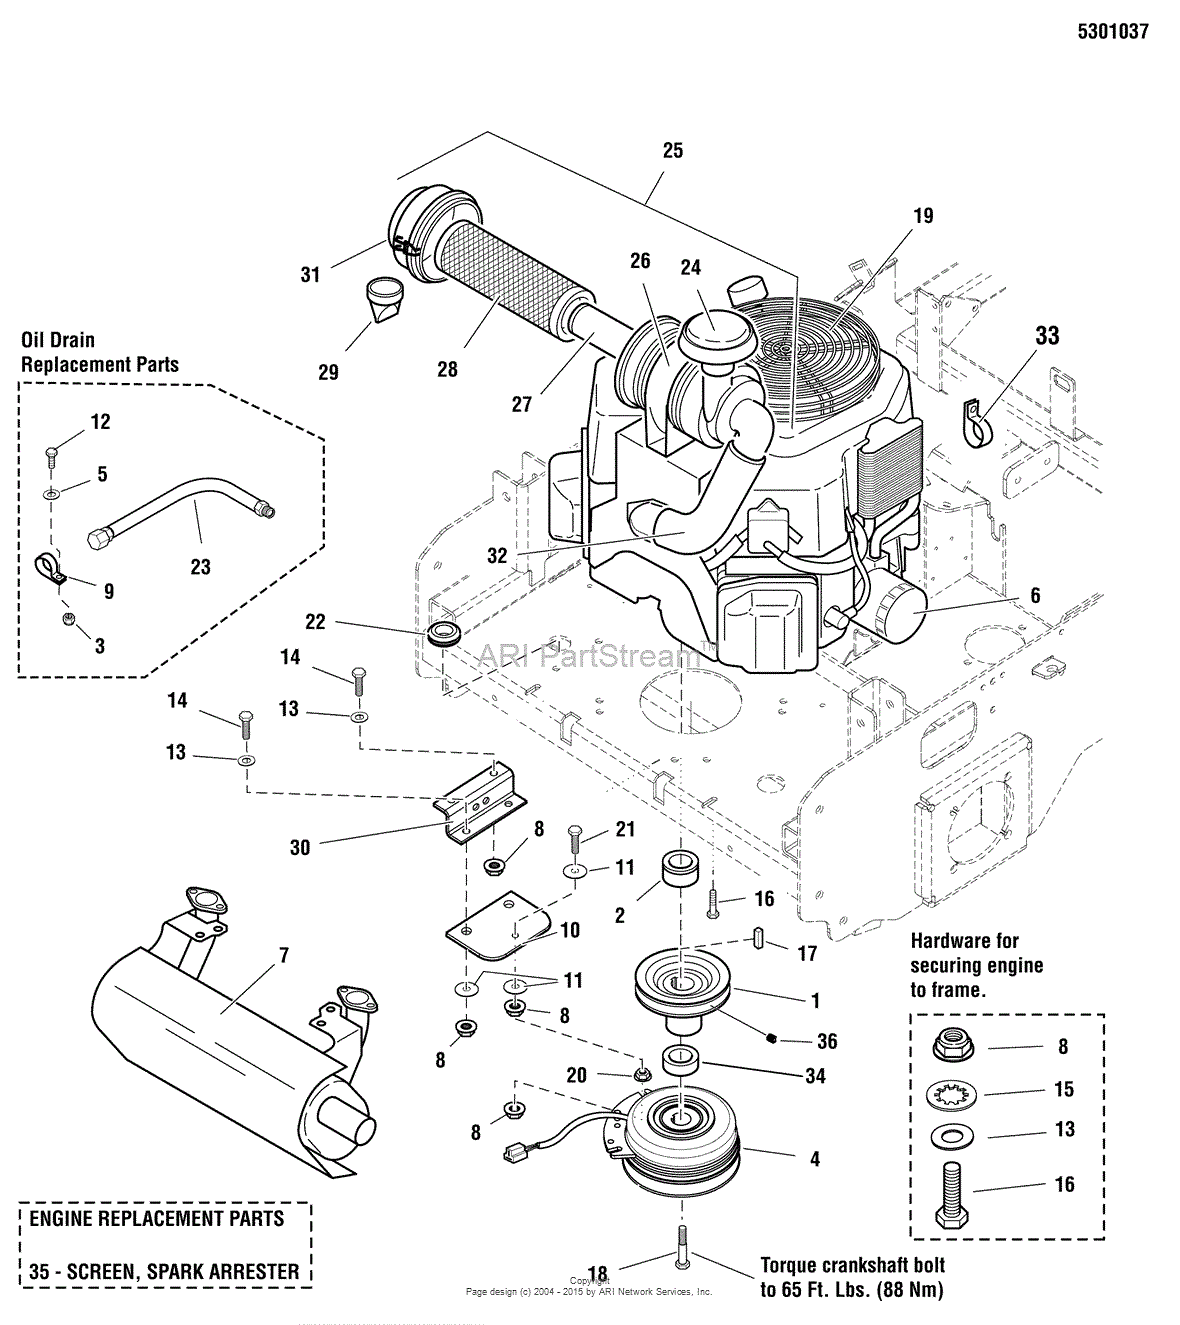 Kohler 27 Hp Engine Parts Diagram - General Wiring Diagram